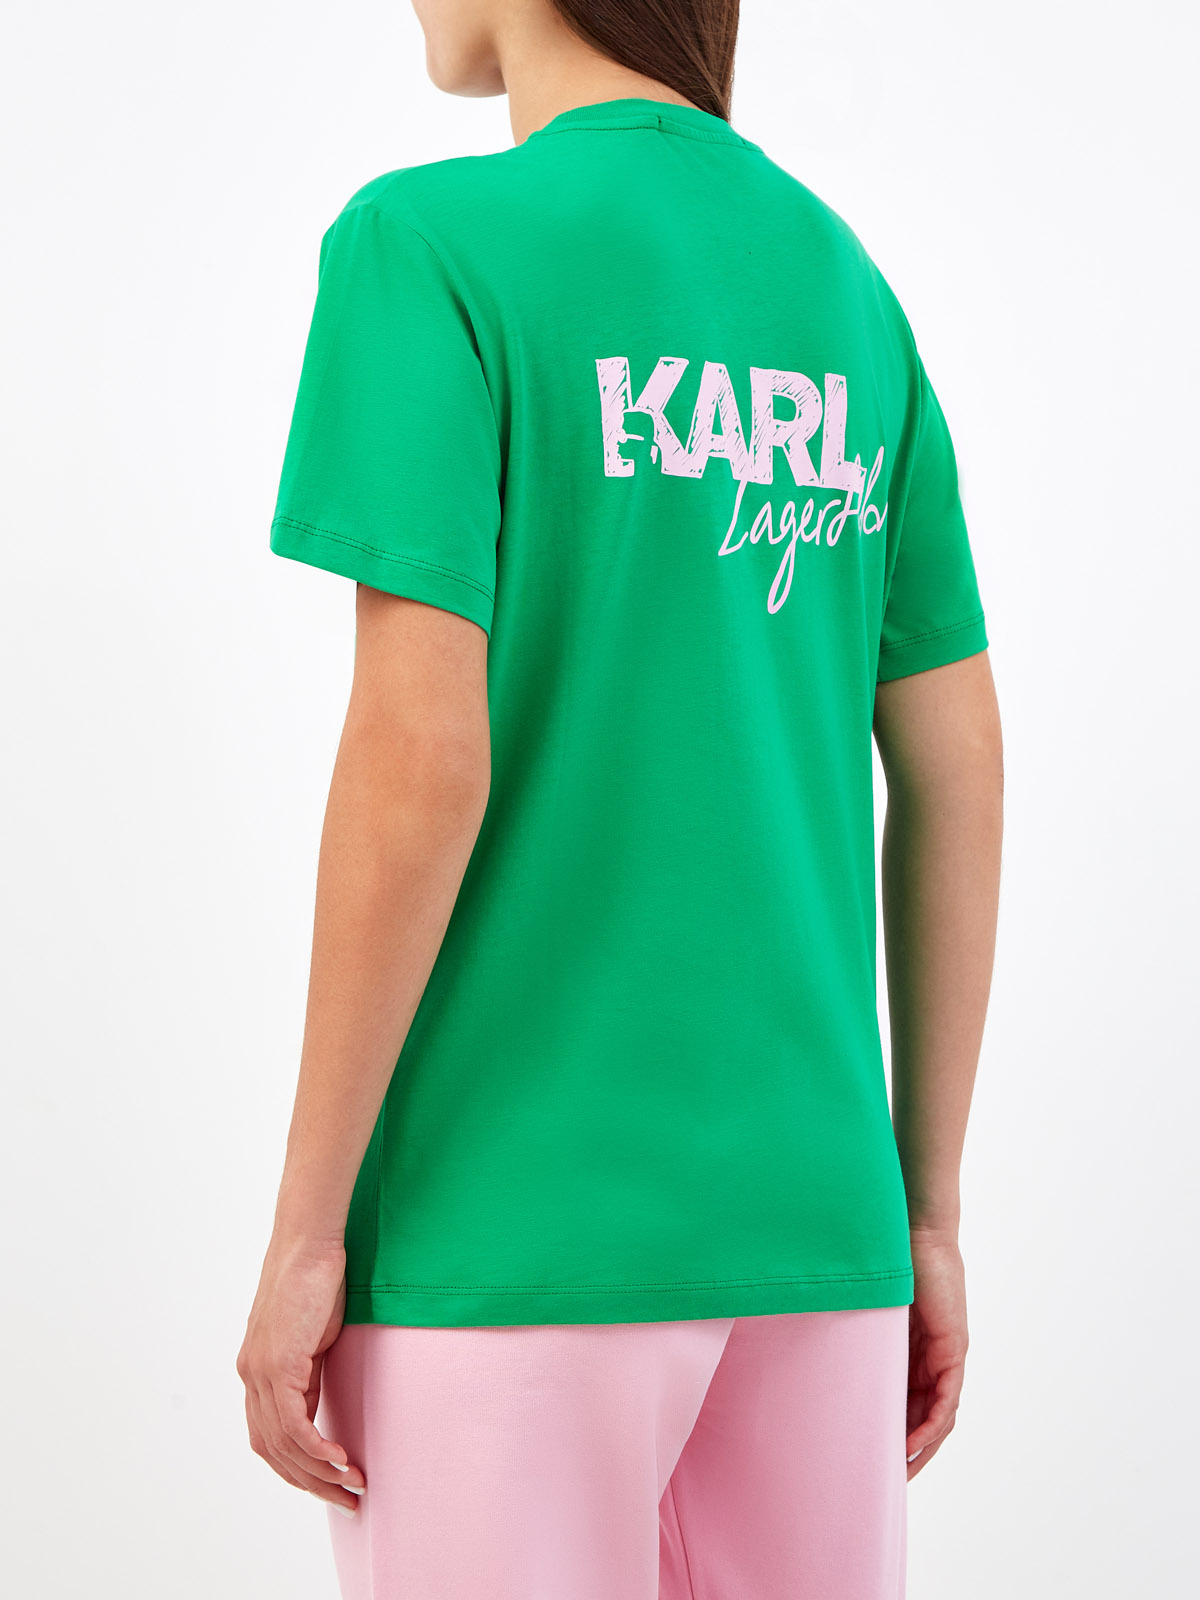 Хлопковая футболка-oversize с контрастным принтом KARL LAGERFELD, цвет зеленый, размер XS;S;M;L;XL - фото 4